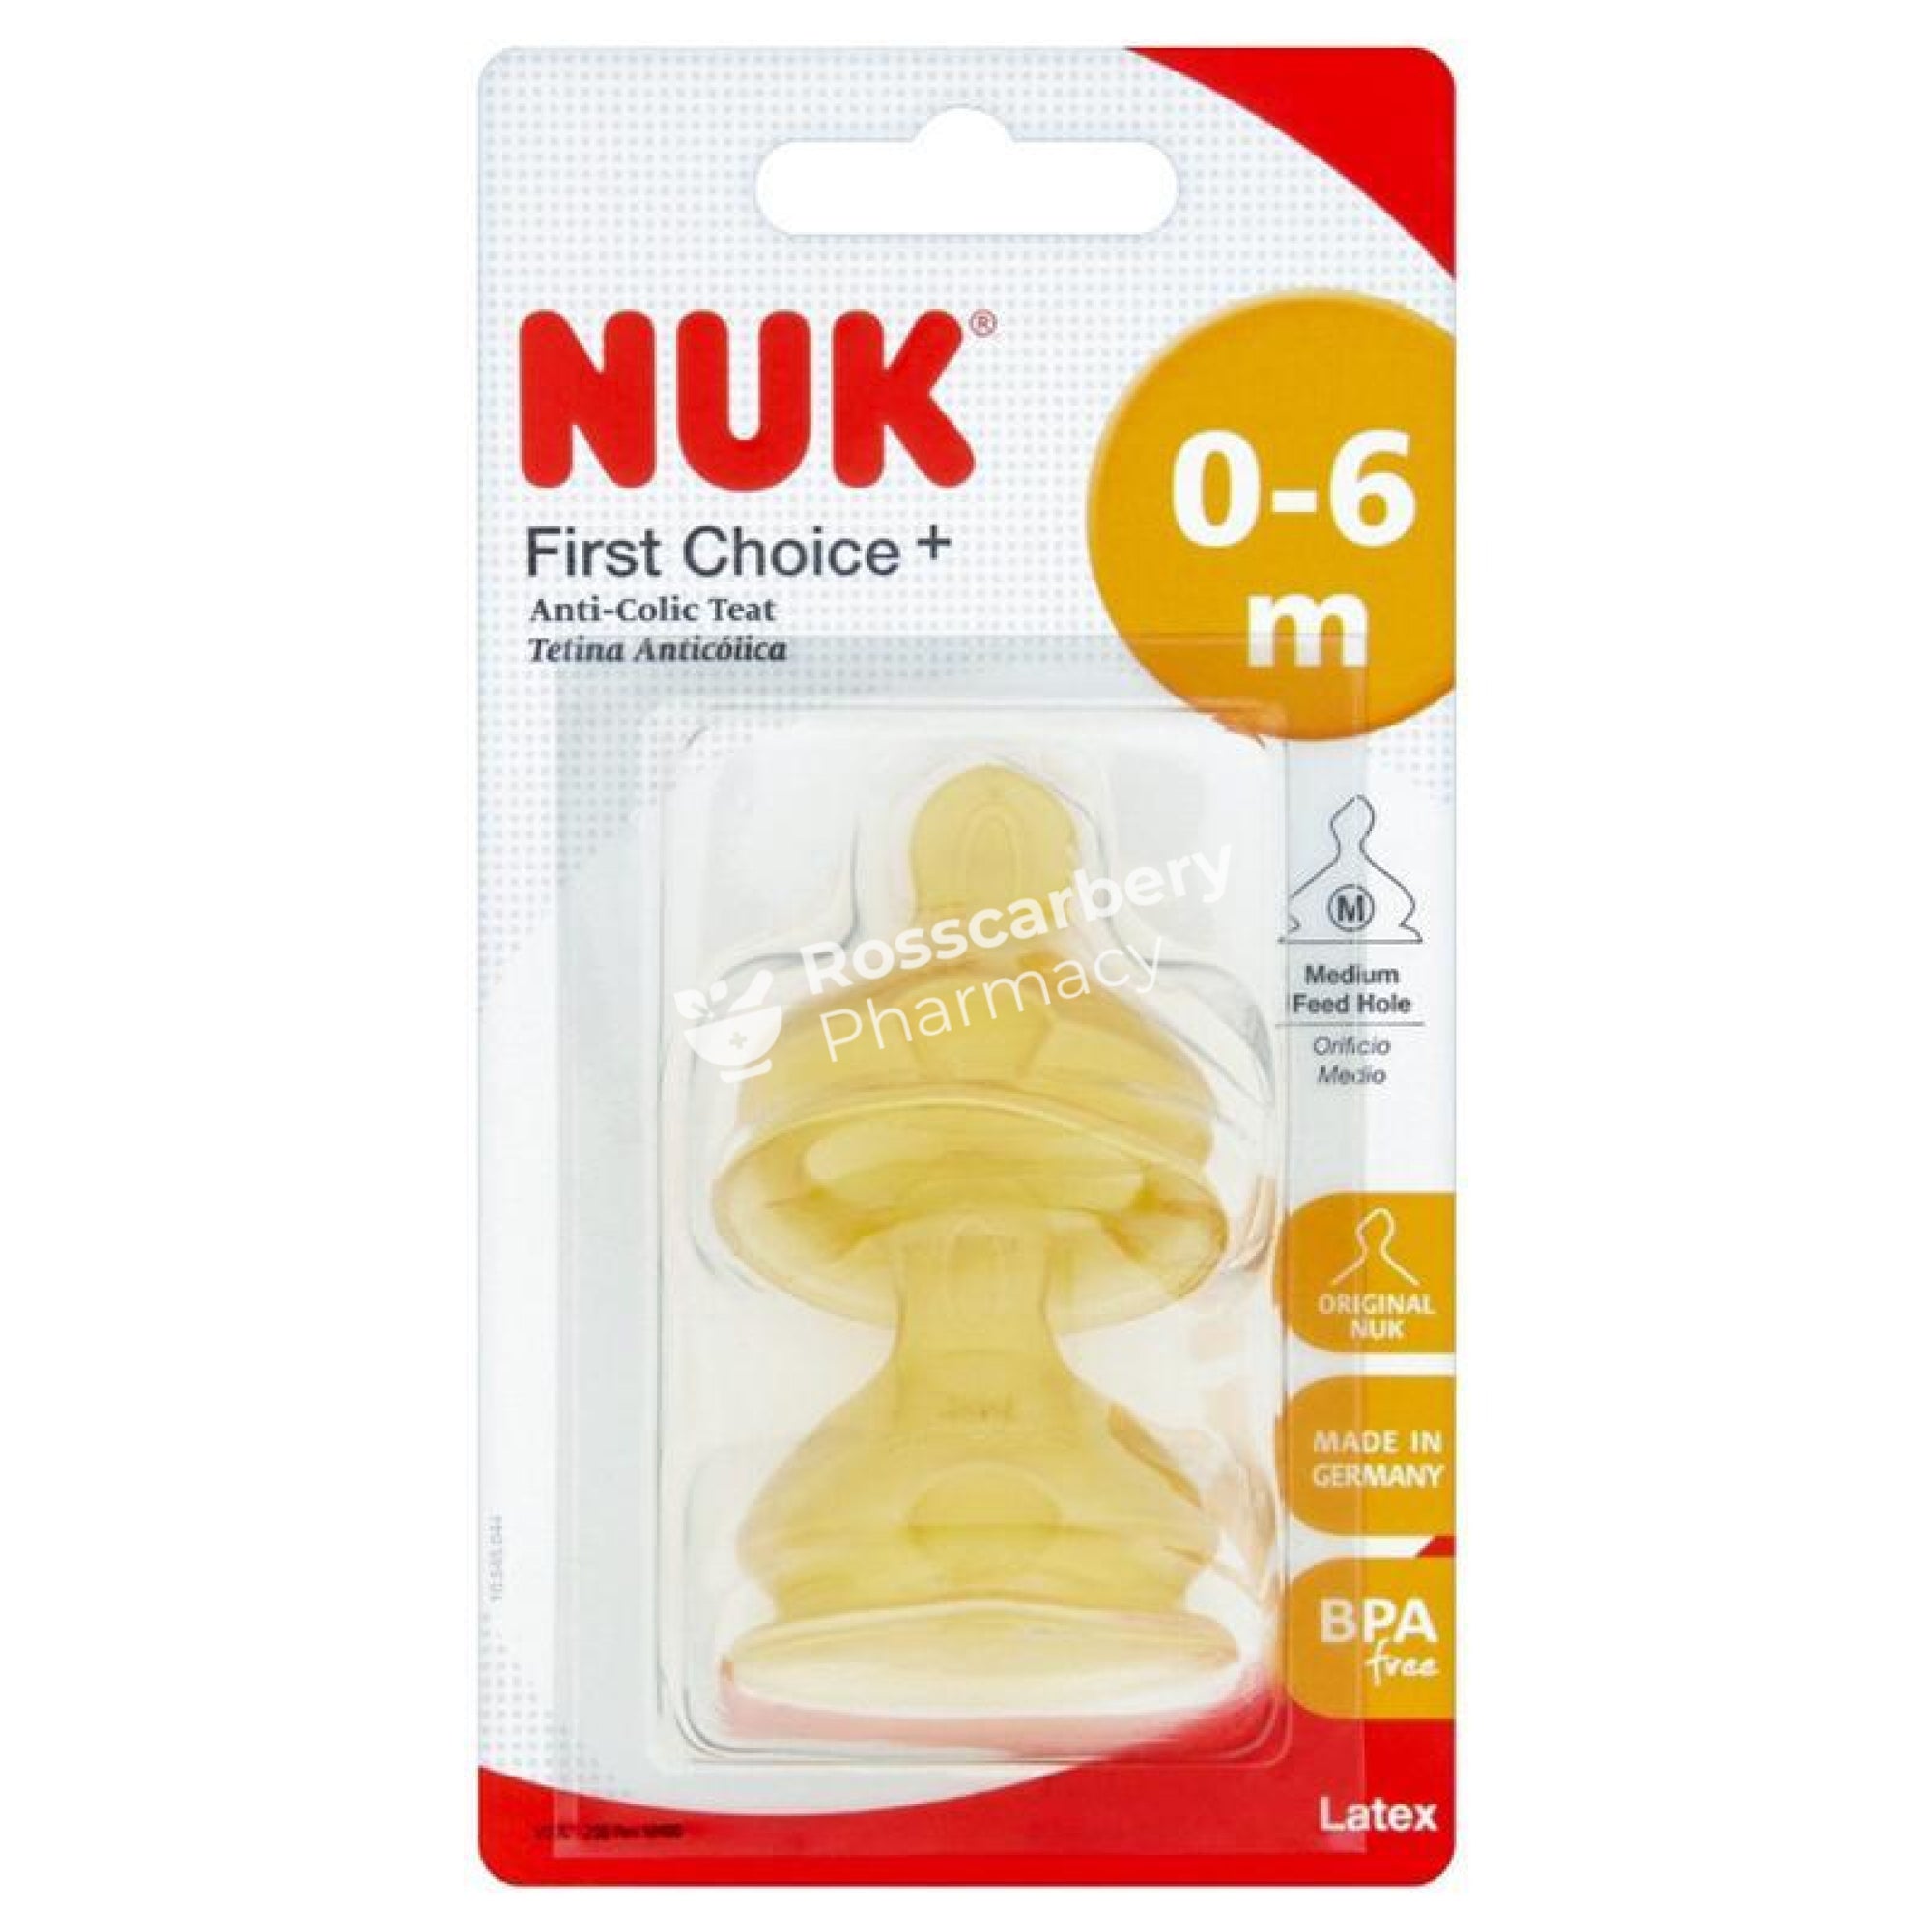 Nuk First Choice+ Anti-Colic Teat 0-6M Latex Teats